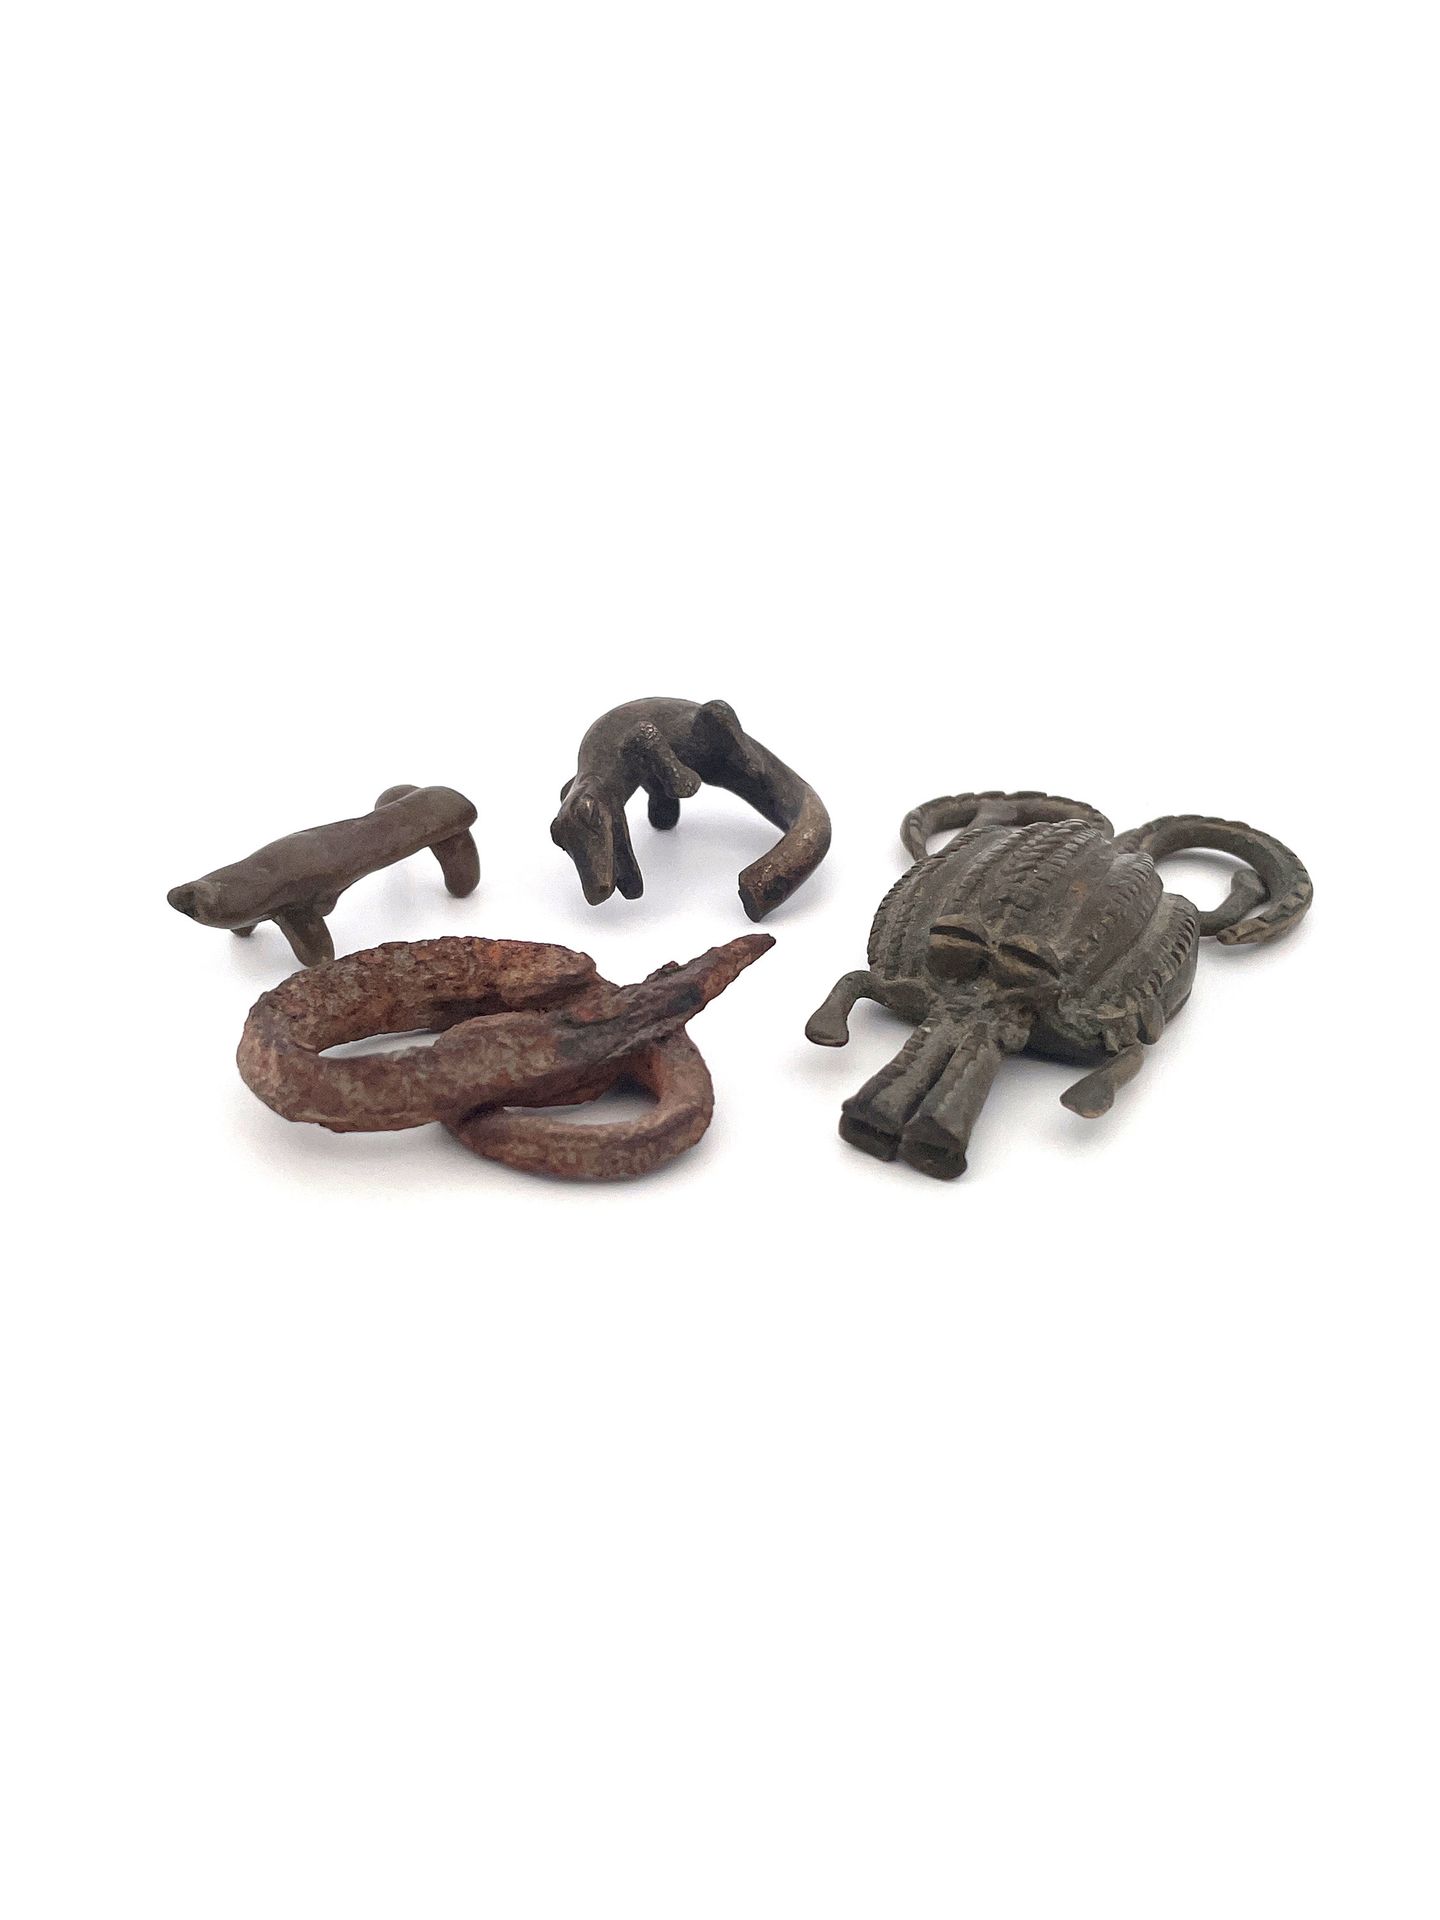 3 Miiature Bronzes and an Iron Snake 3 bronzetti e 1 serpente di ferro

Ghana

O&hellip;